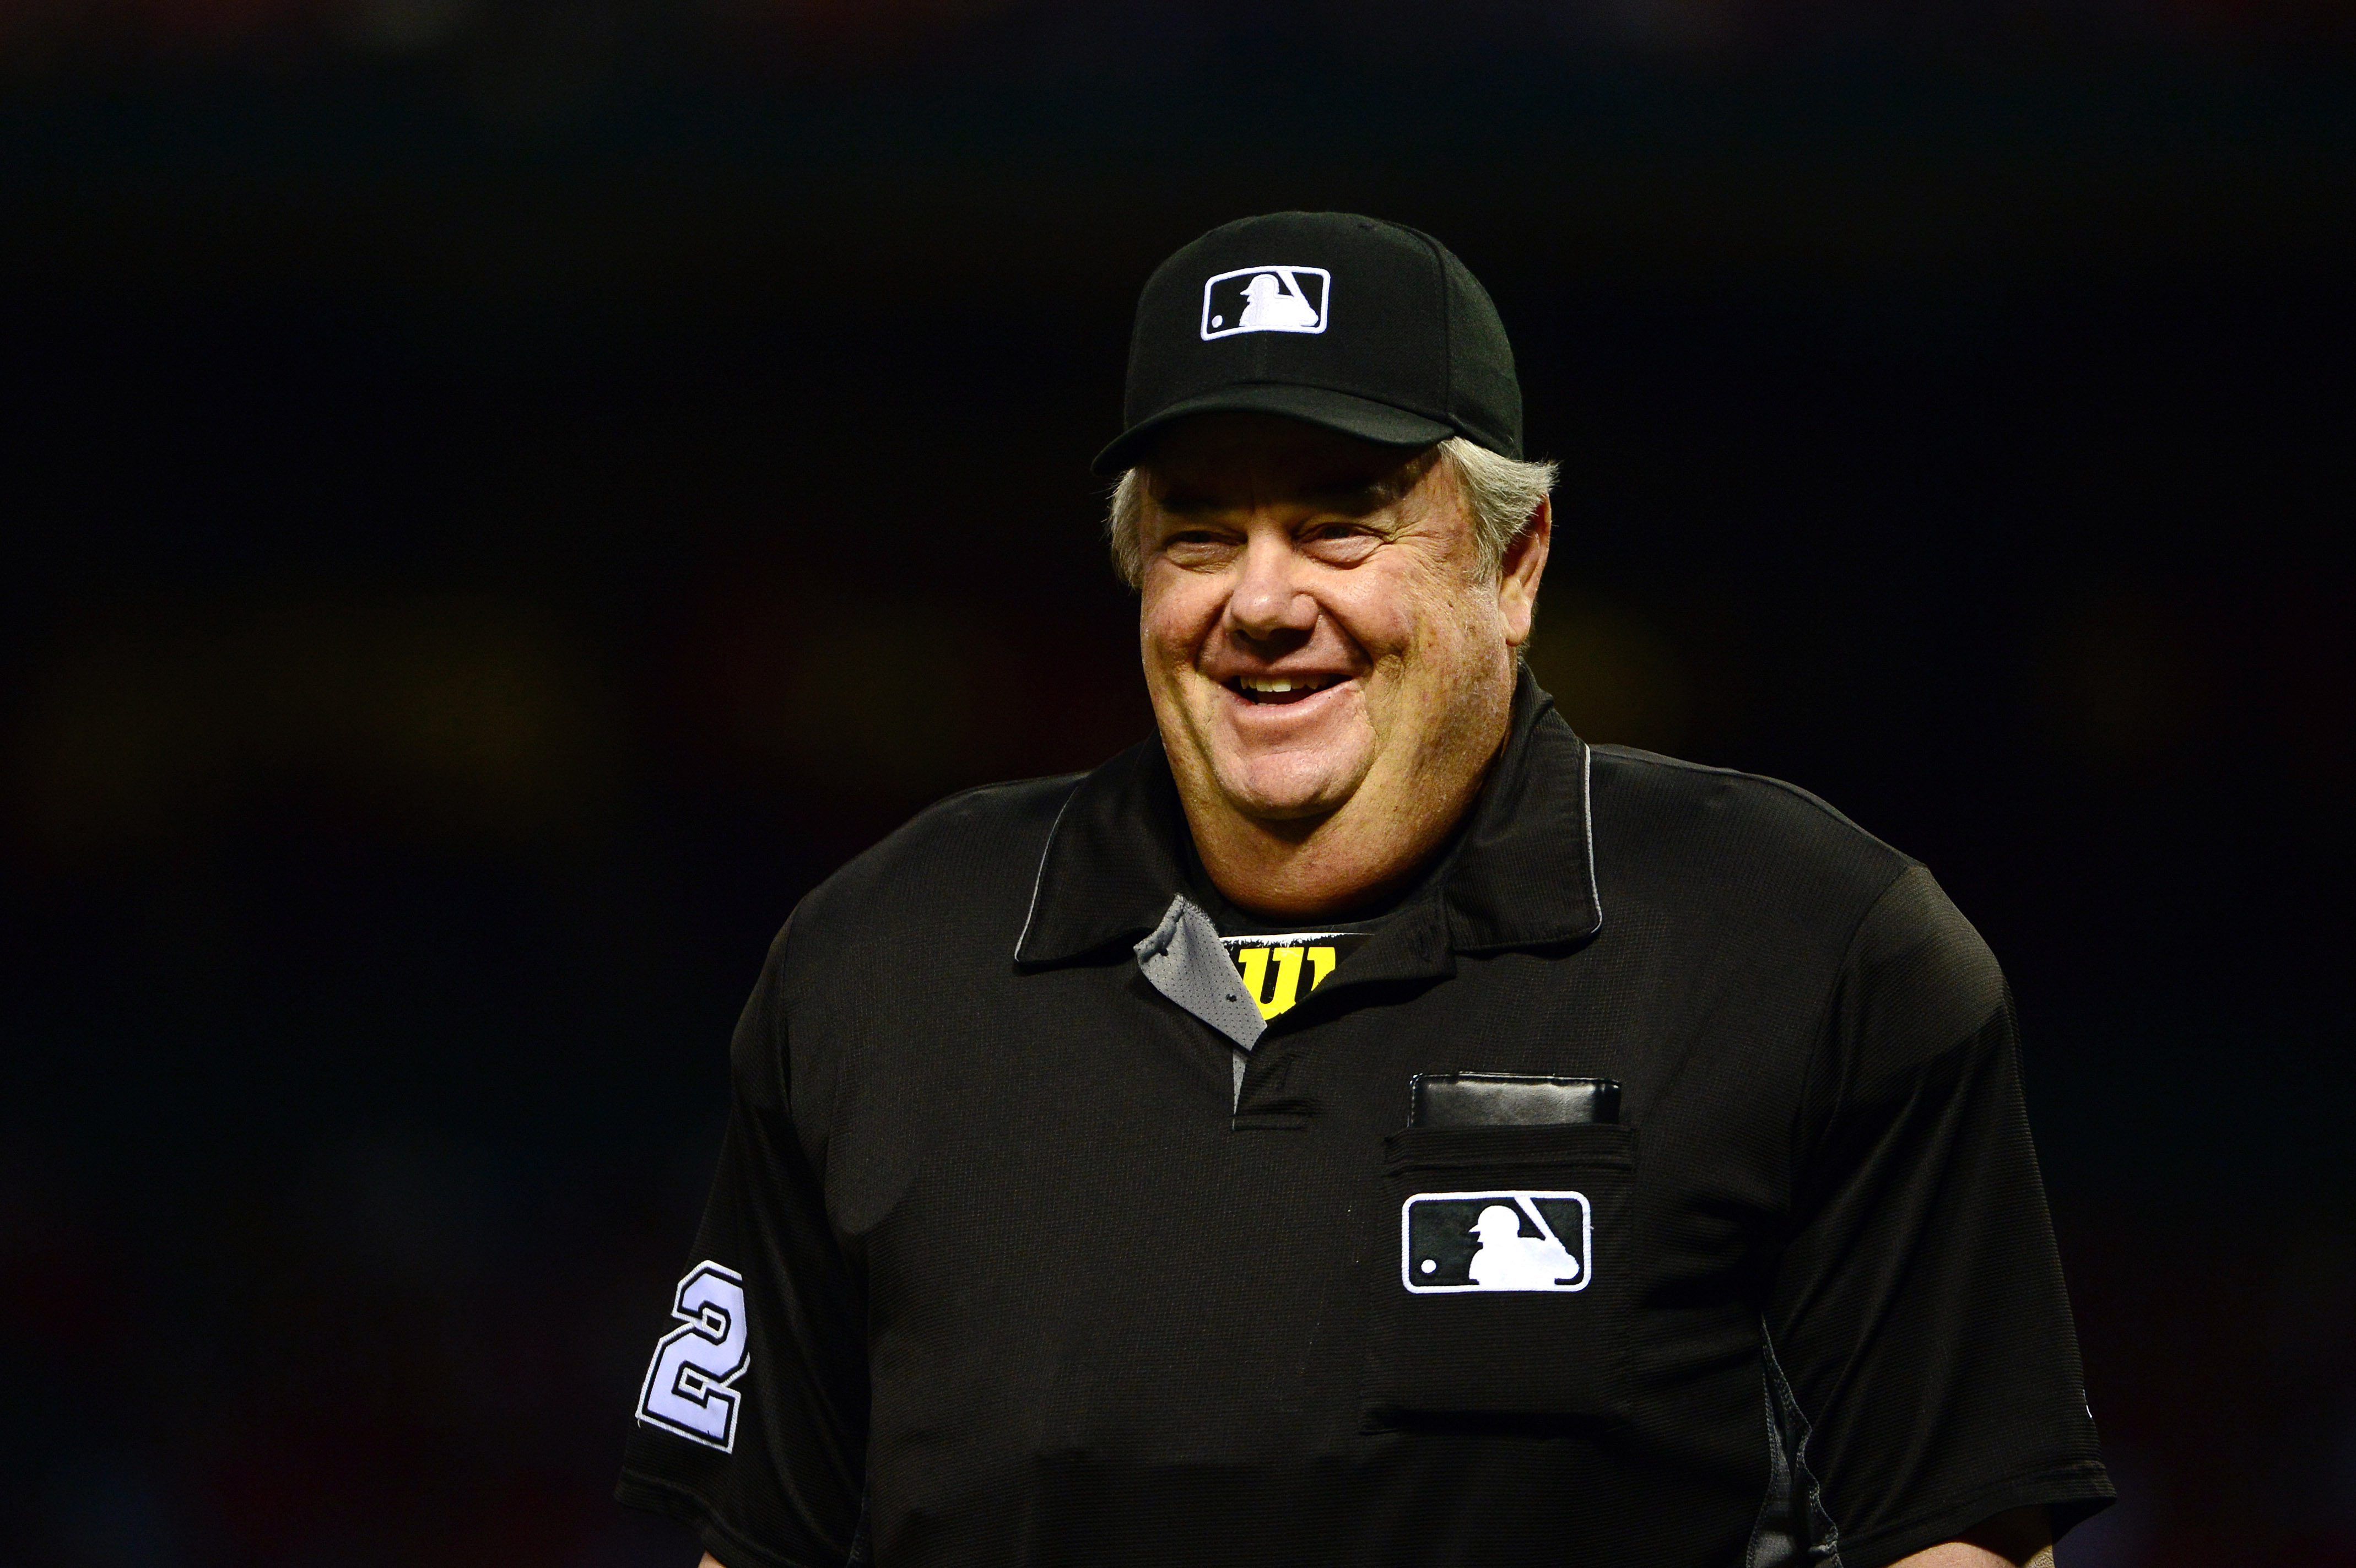 Umpire Joe West works 5,000th major league game - The Boston Globe